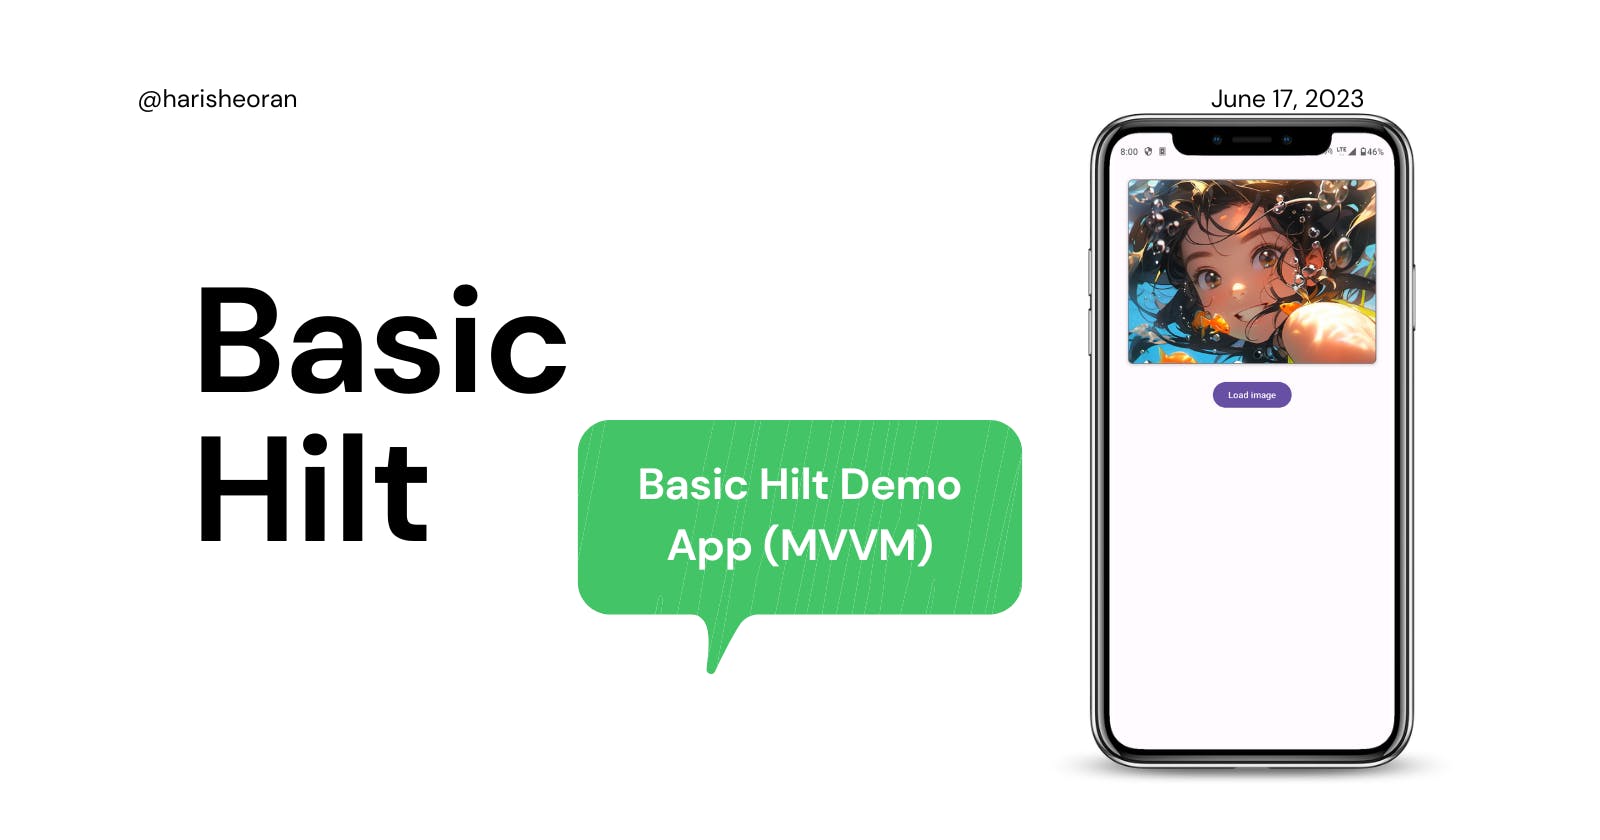 Basic Hilt Demo App